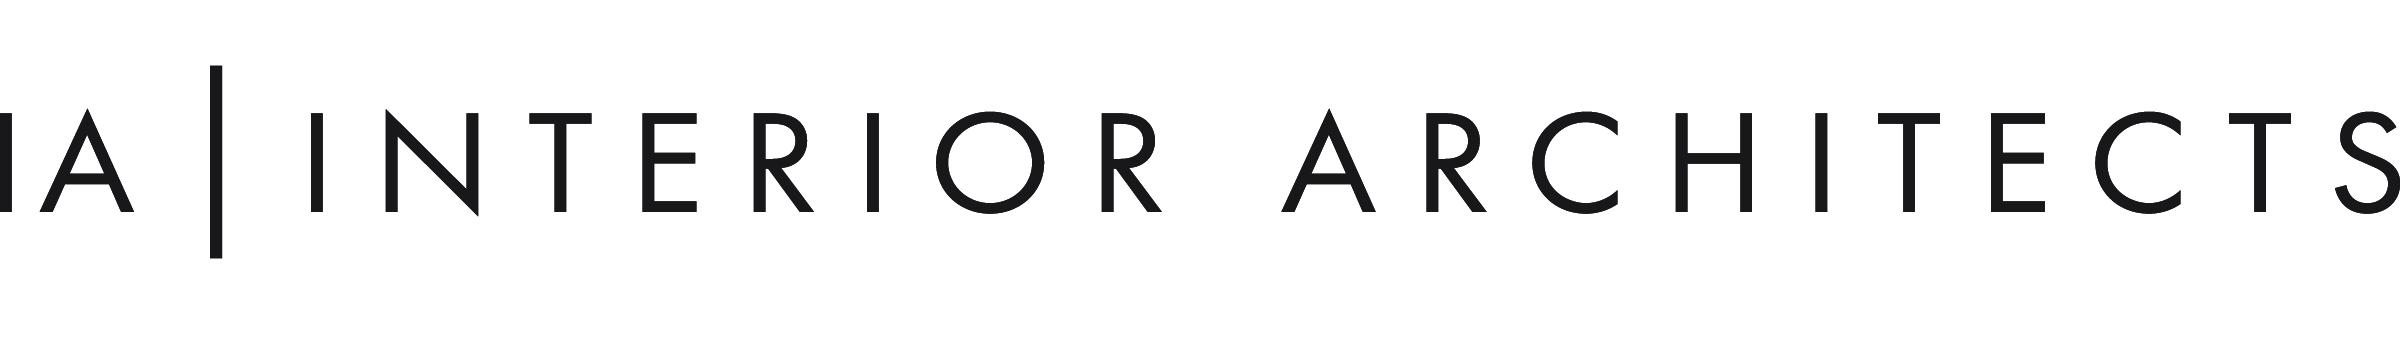 IA Interior Architects - Horizontal Logos.png